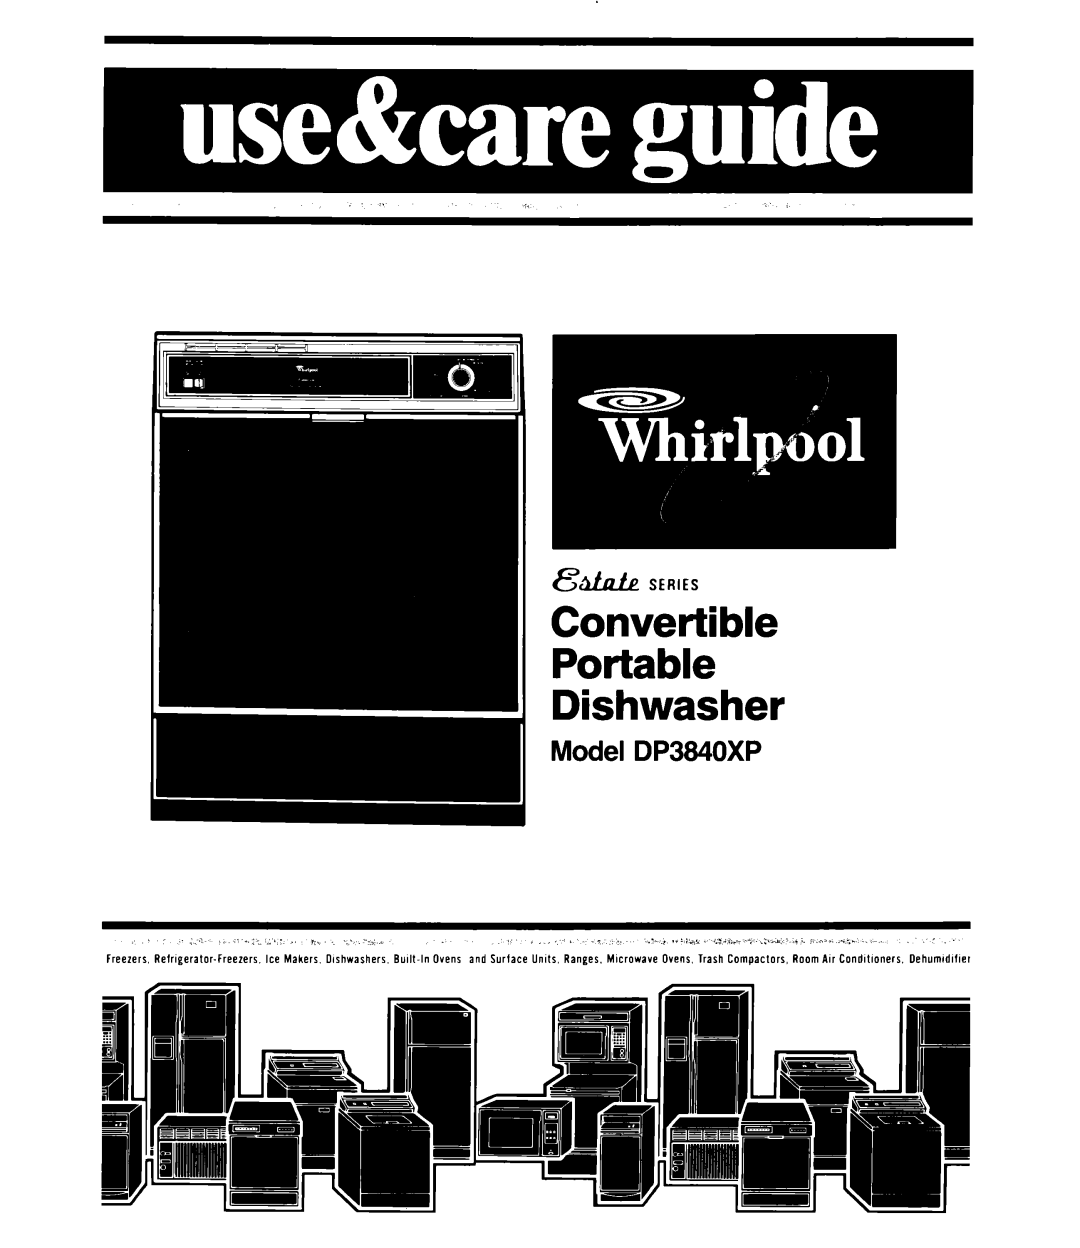 Whirlpool manual Model DP3840XP, Convertible Portable Dishwasher, Reirlgerator-Freezers, Room Air 